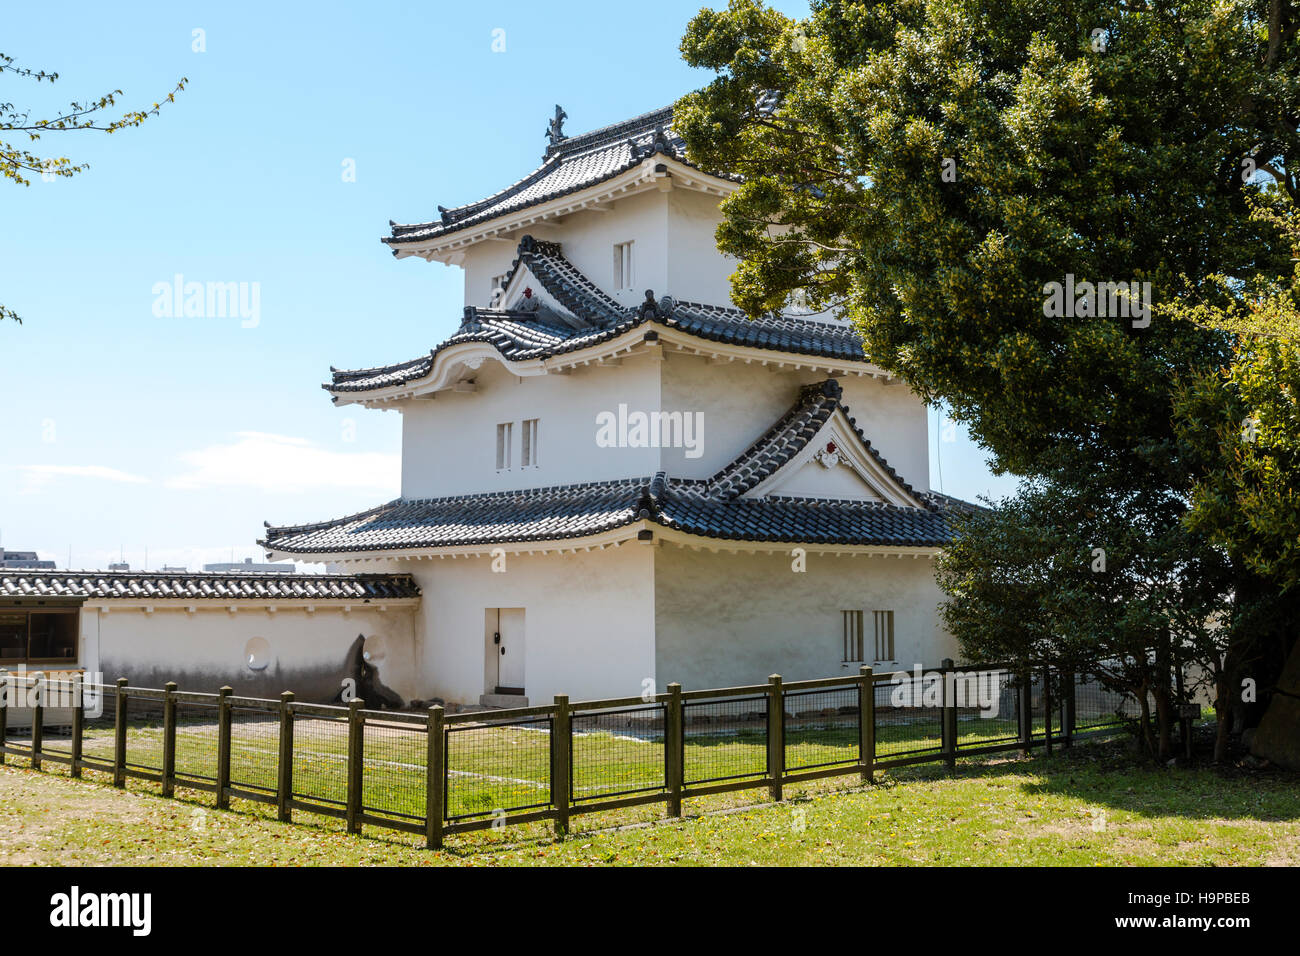 Giappone, Akashi castle, AKA Kishun-jo. La storia di tre Hitsujisaru yagura, torretta, con cielo blu sullo sfondo. Foto Stock